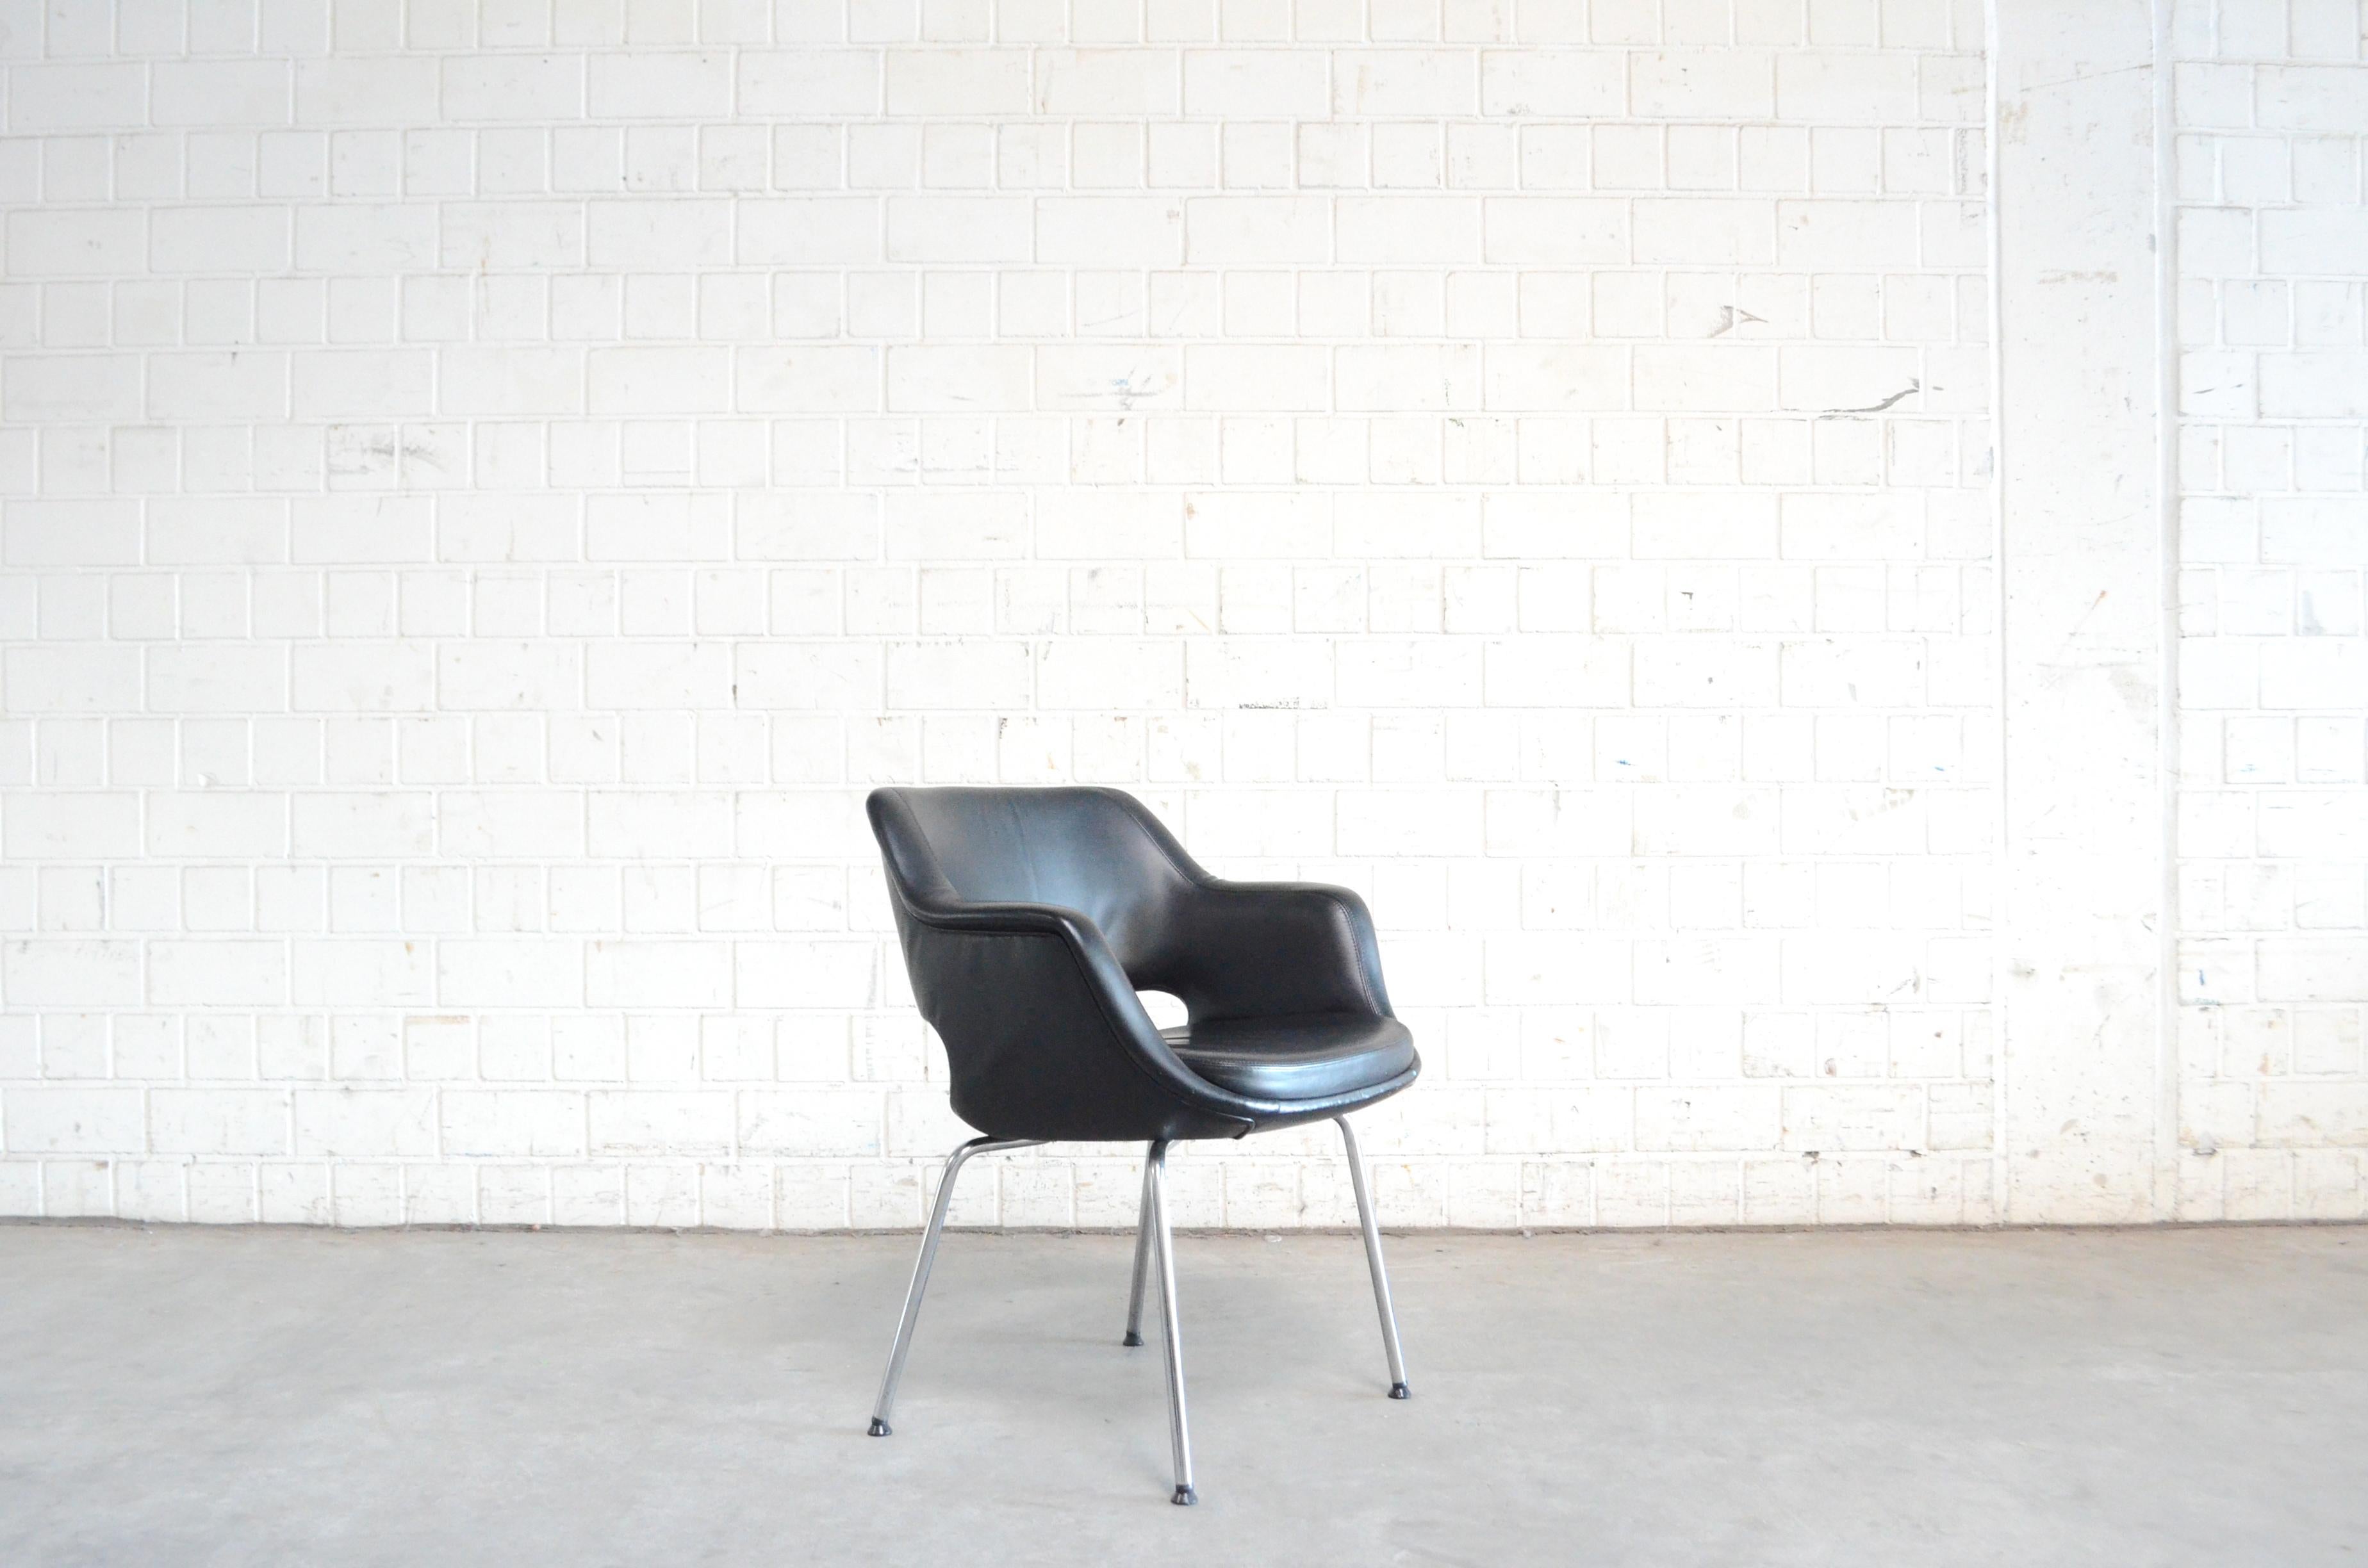 Olli Mannermaa Pair of Leather Kilta Chair by Eugen Schmidt & Cassina Martela For Sale 8